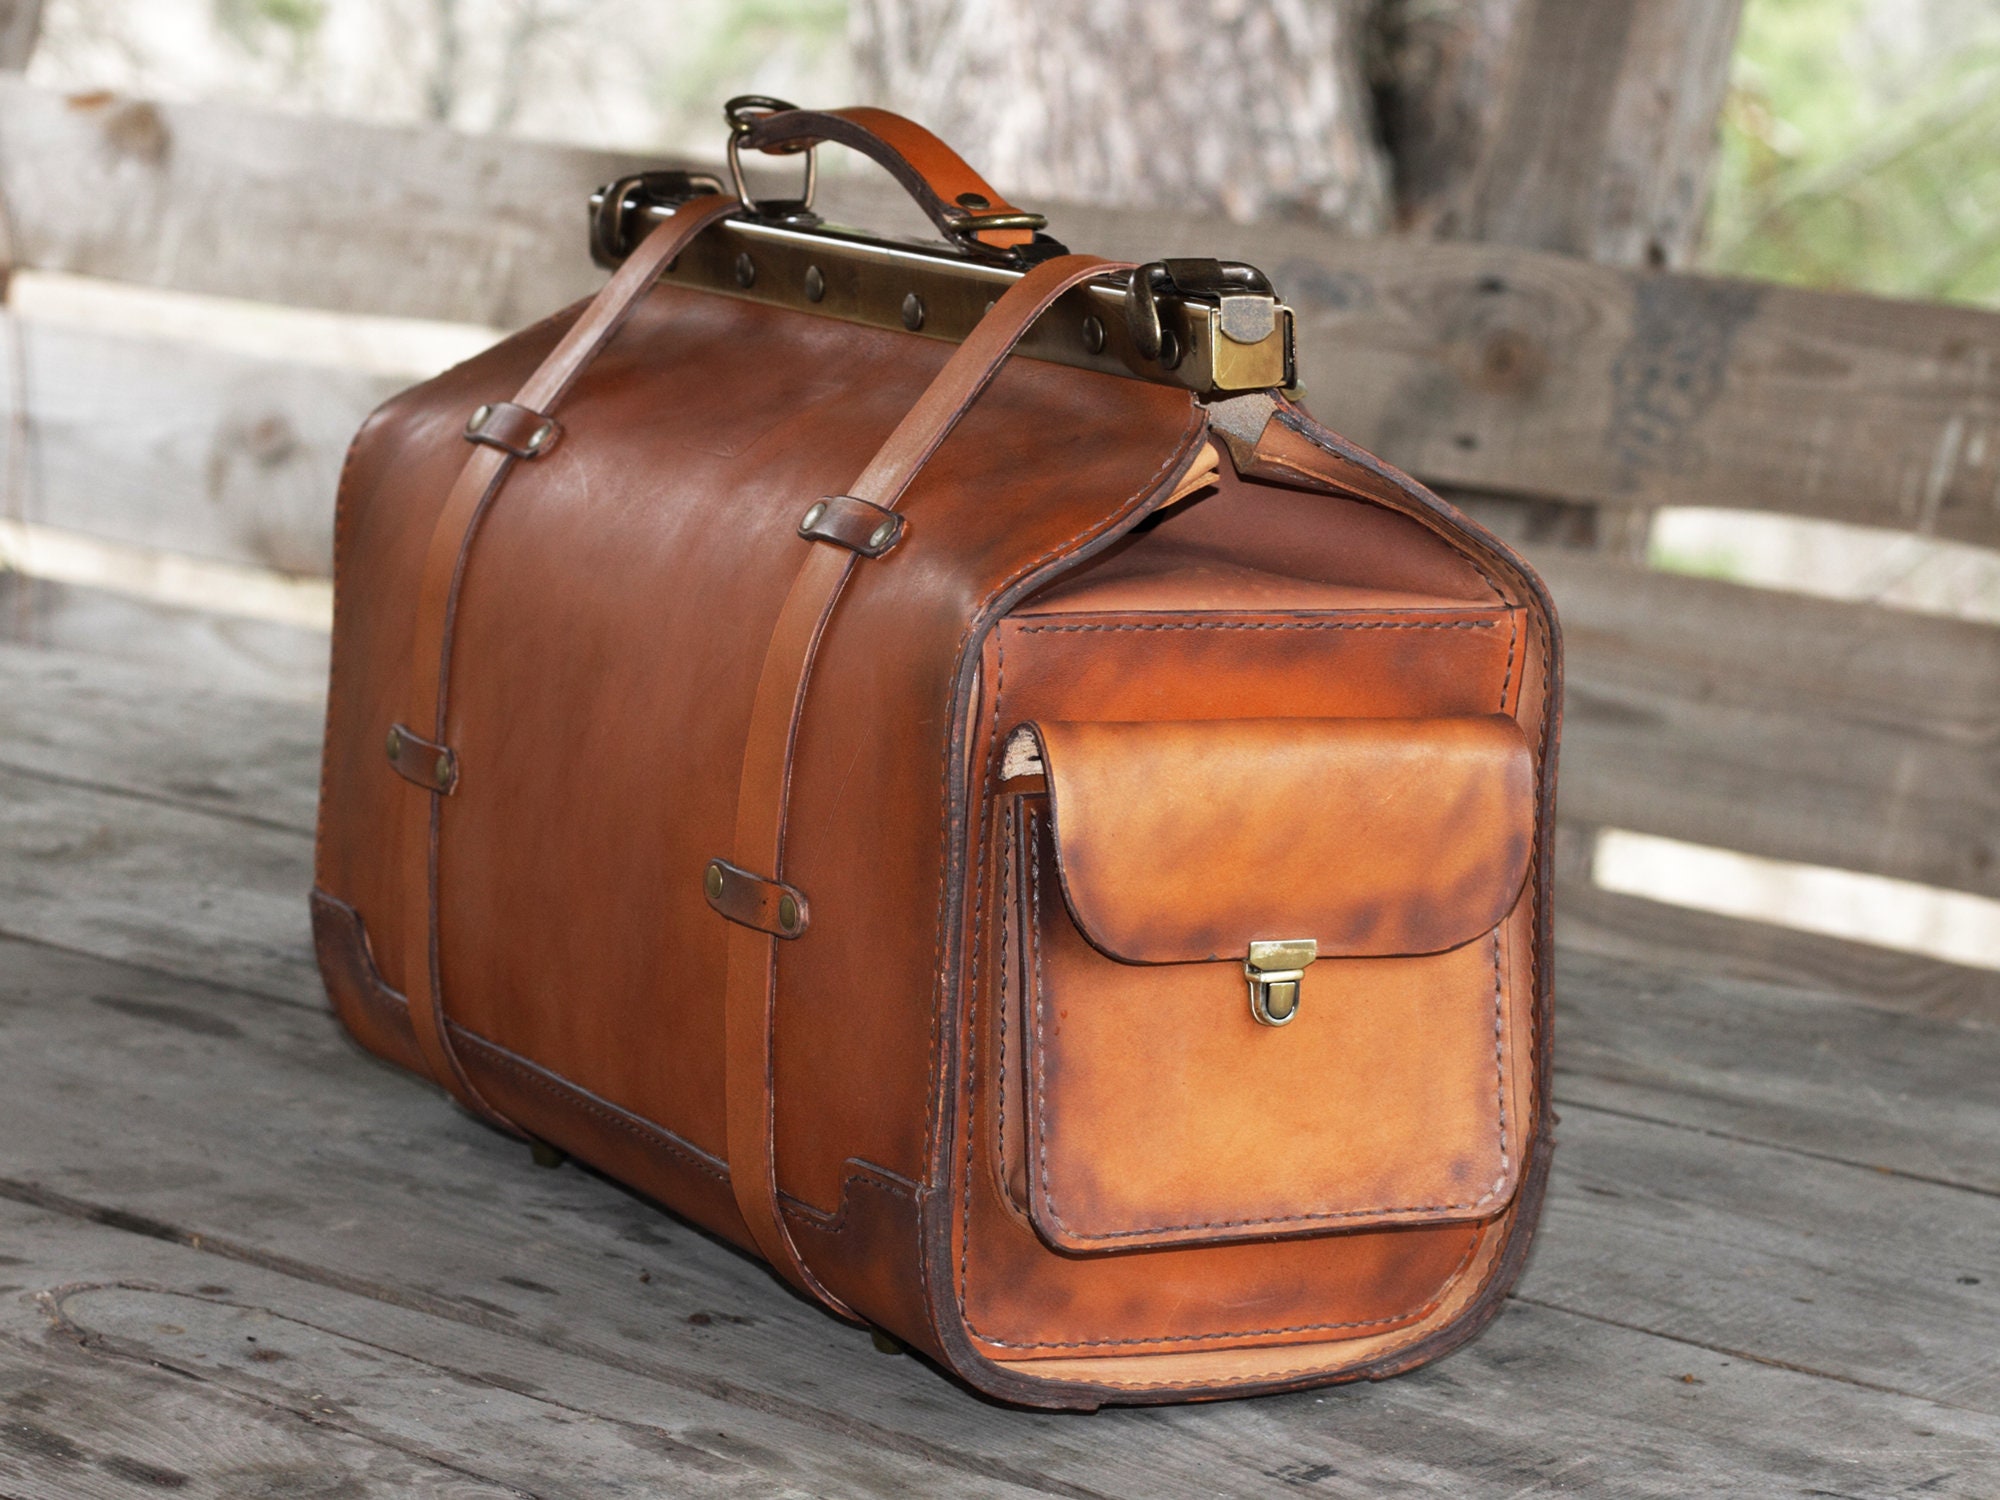 Leather Travel Bag Made of Orange Leather Handmade Carry-on | Etsy